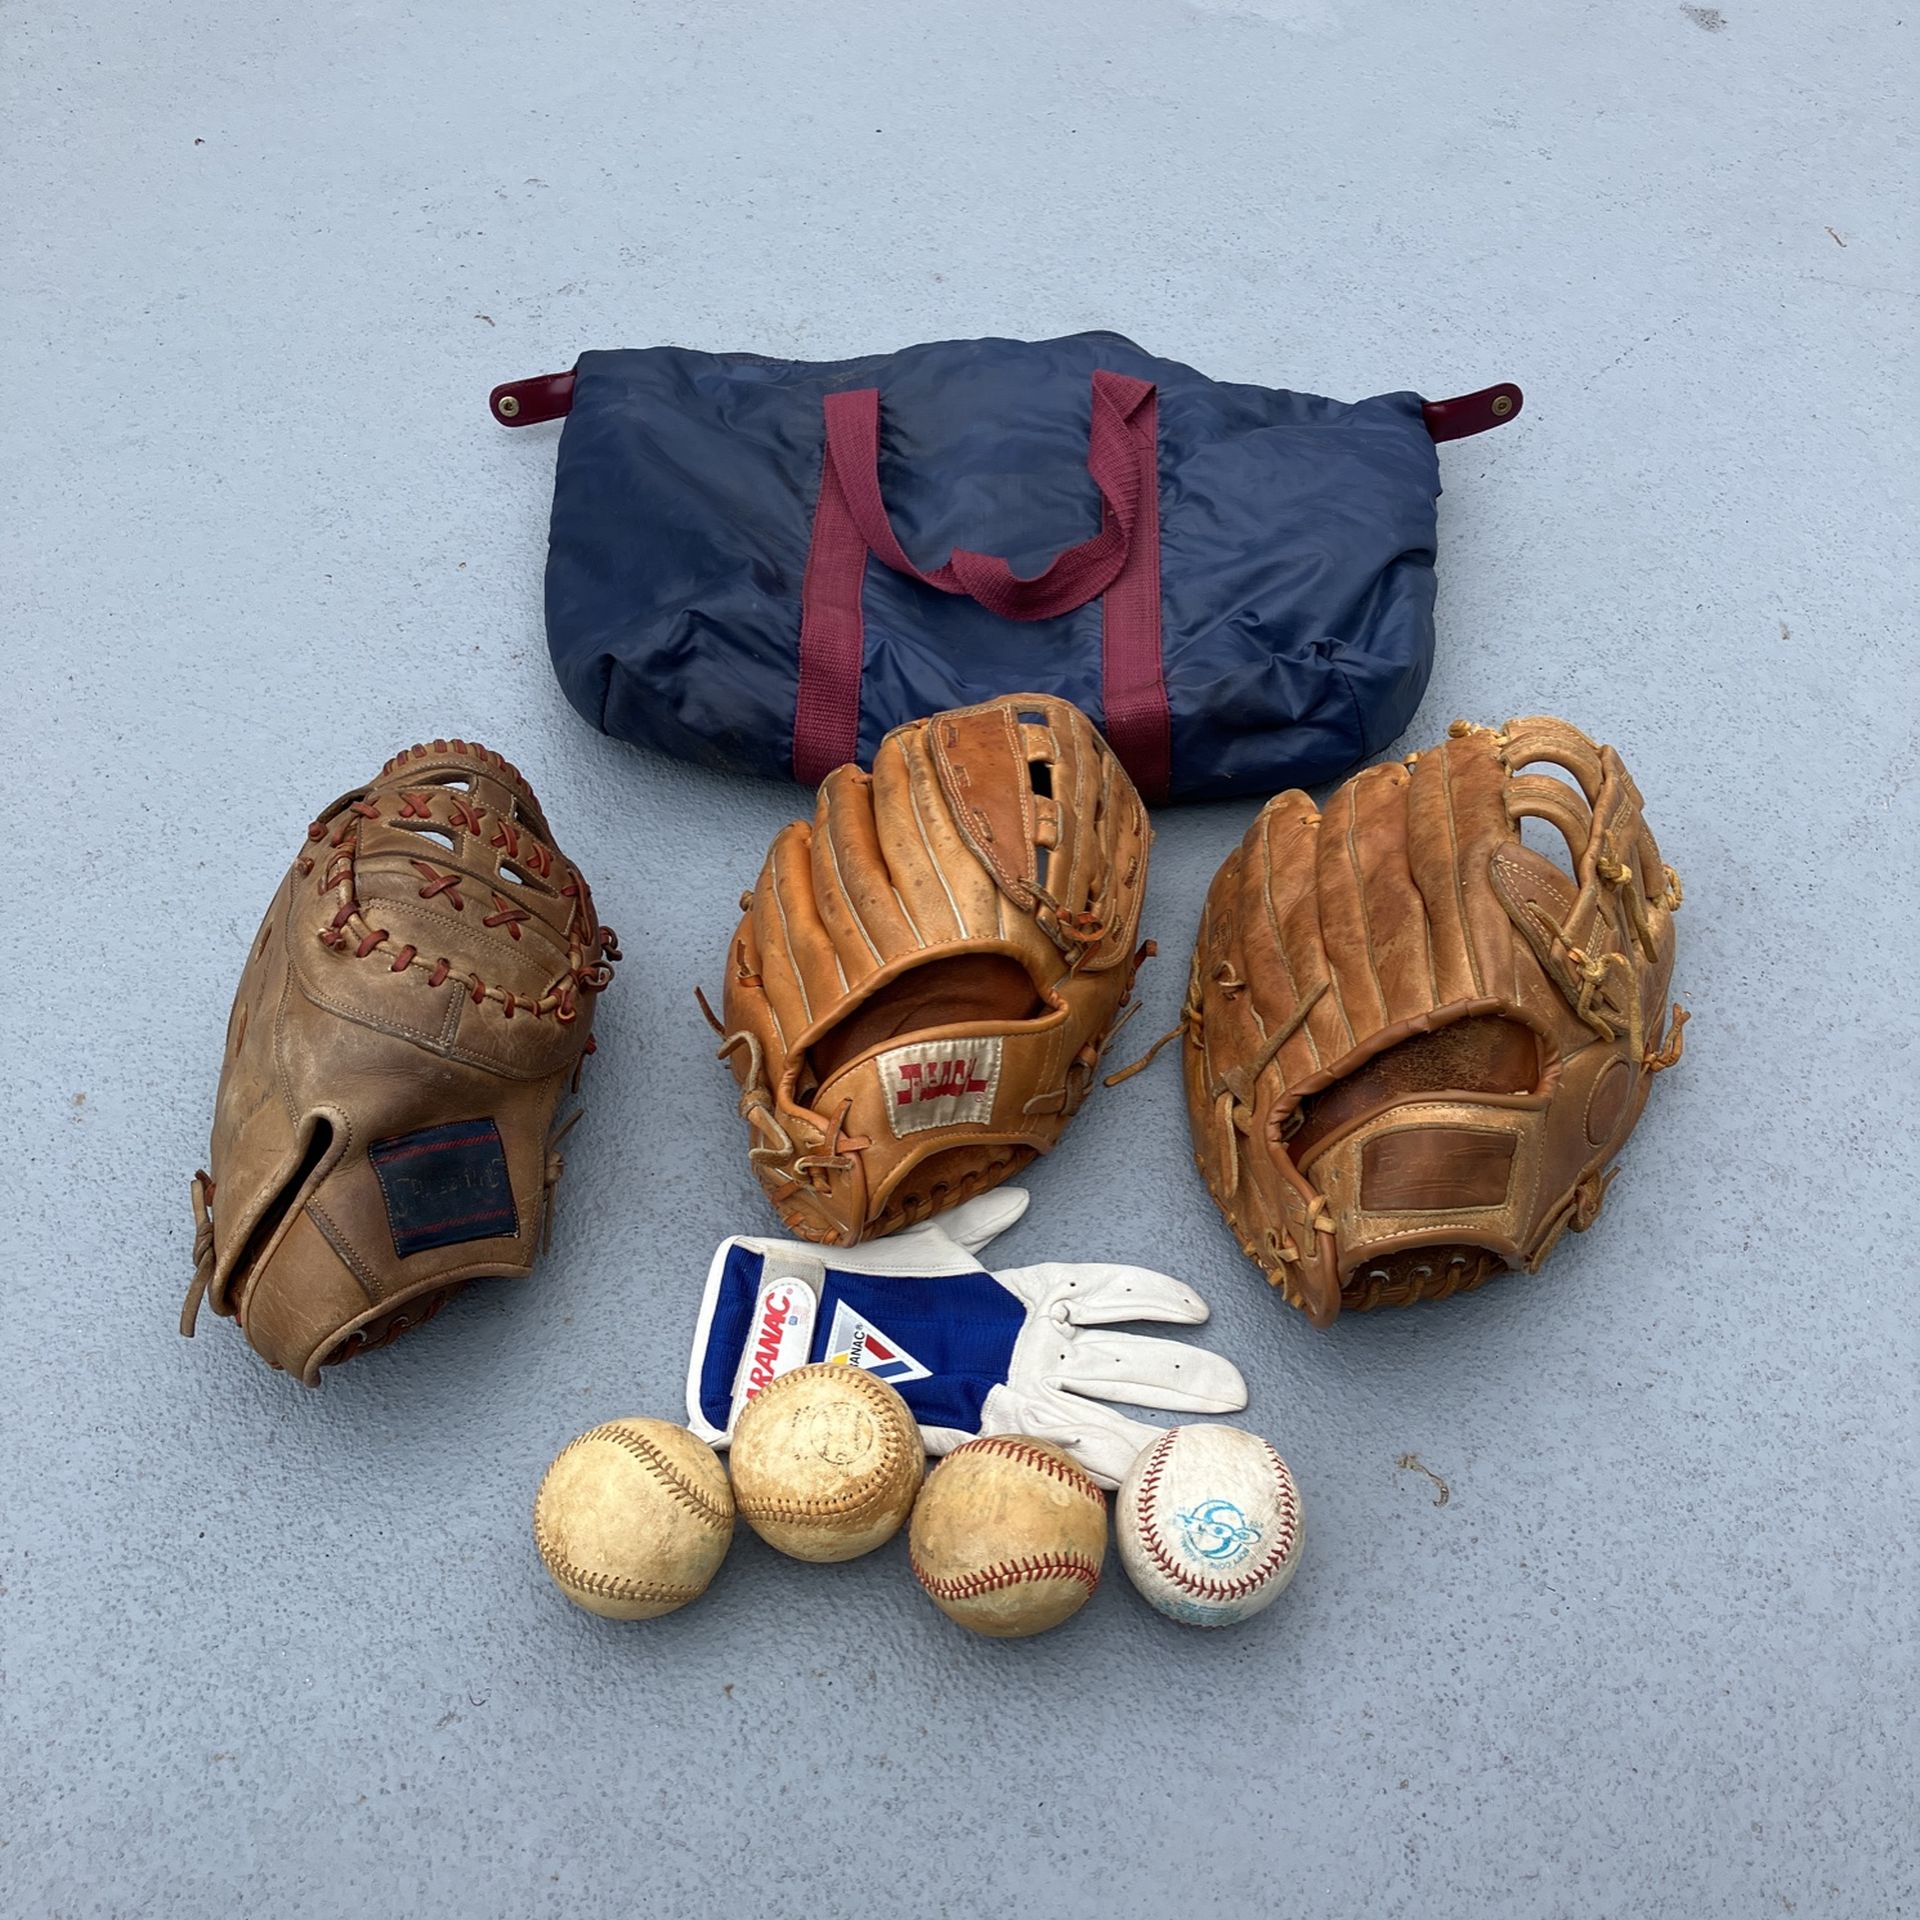 3 BASEBALL ⚾️ GLOVES 1 CATCHER GLOVE 1 FIRST Baseman Glove & 1 SHORT Stops Glove 1 Batting Glove & 4 BALLS Plus Carrying 💼 Bag